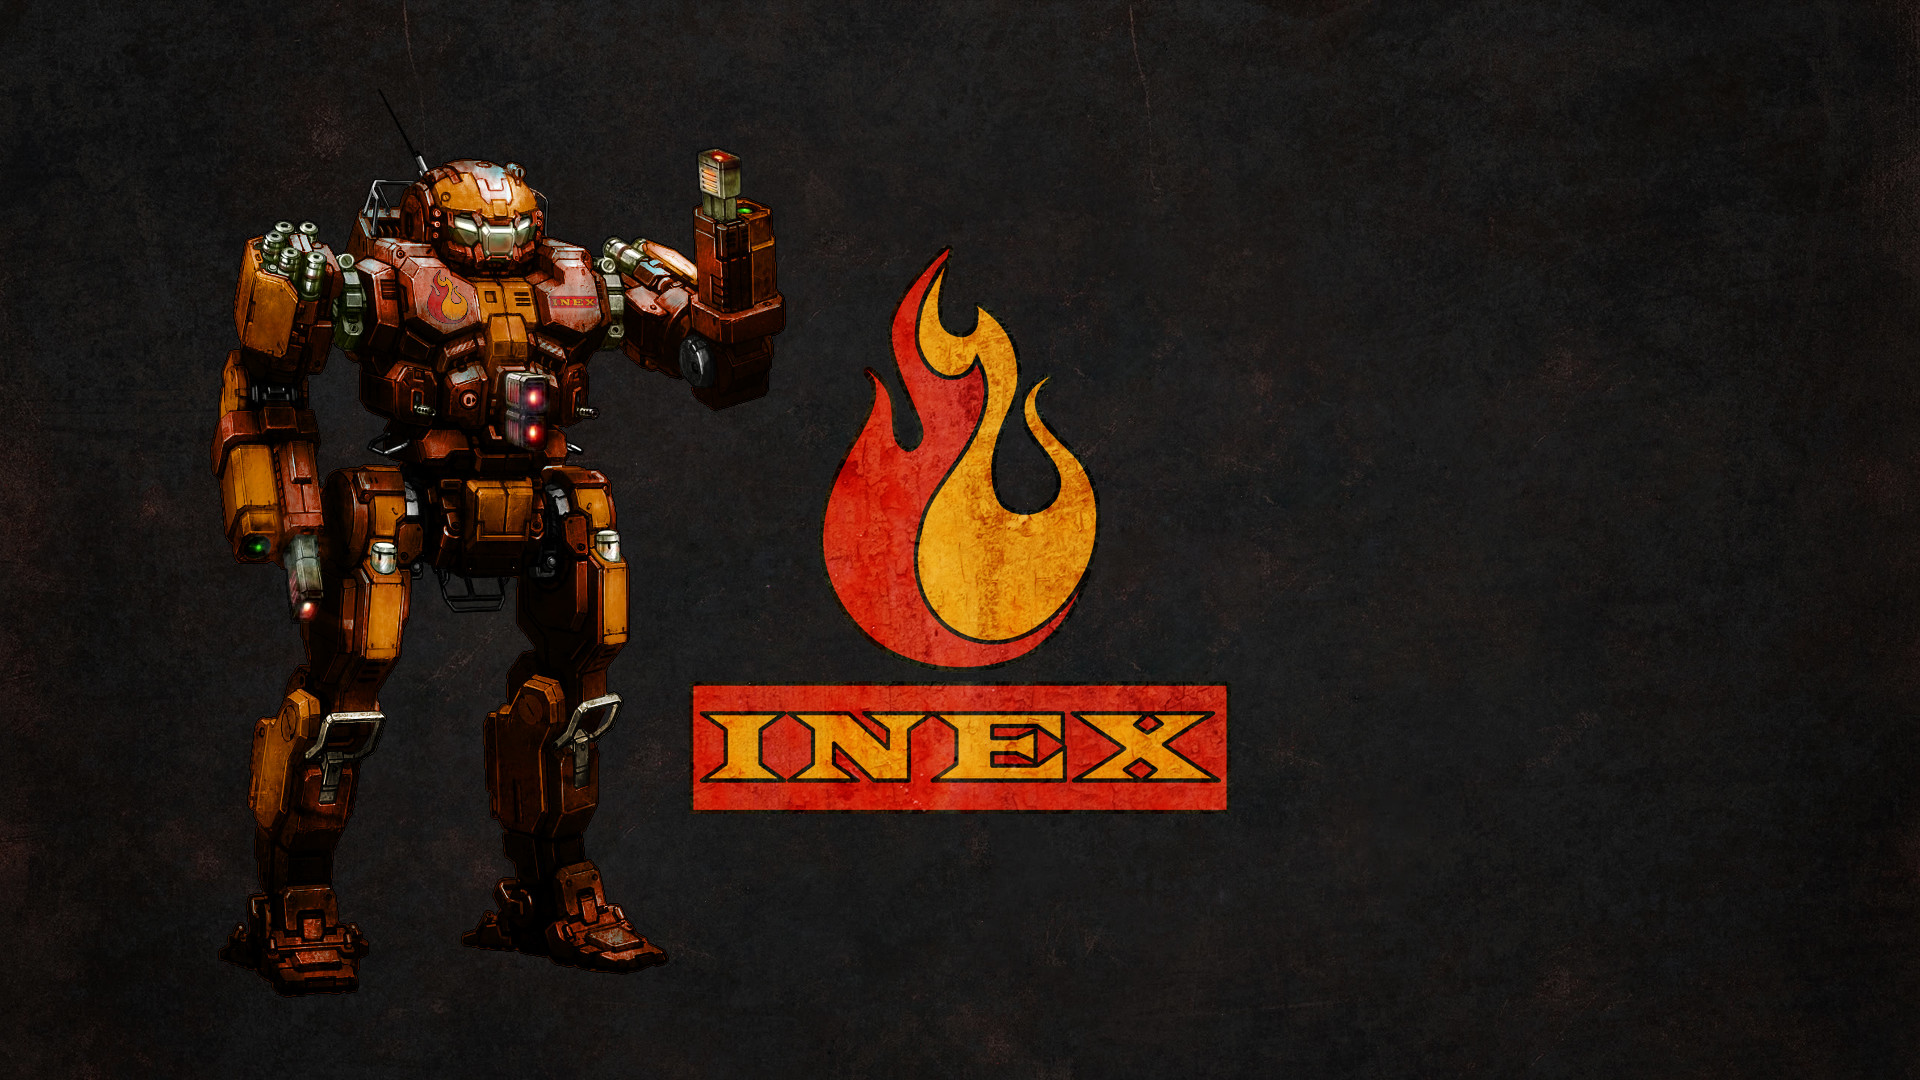 1920x1080 ... Wallpaper MWO Firestarter and INEX logo by Odanan